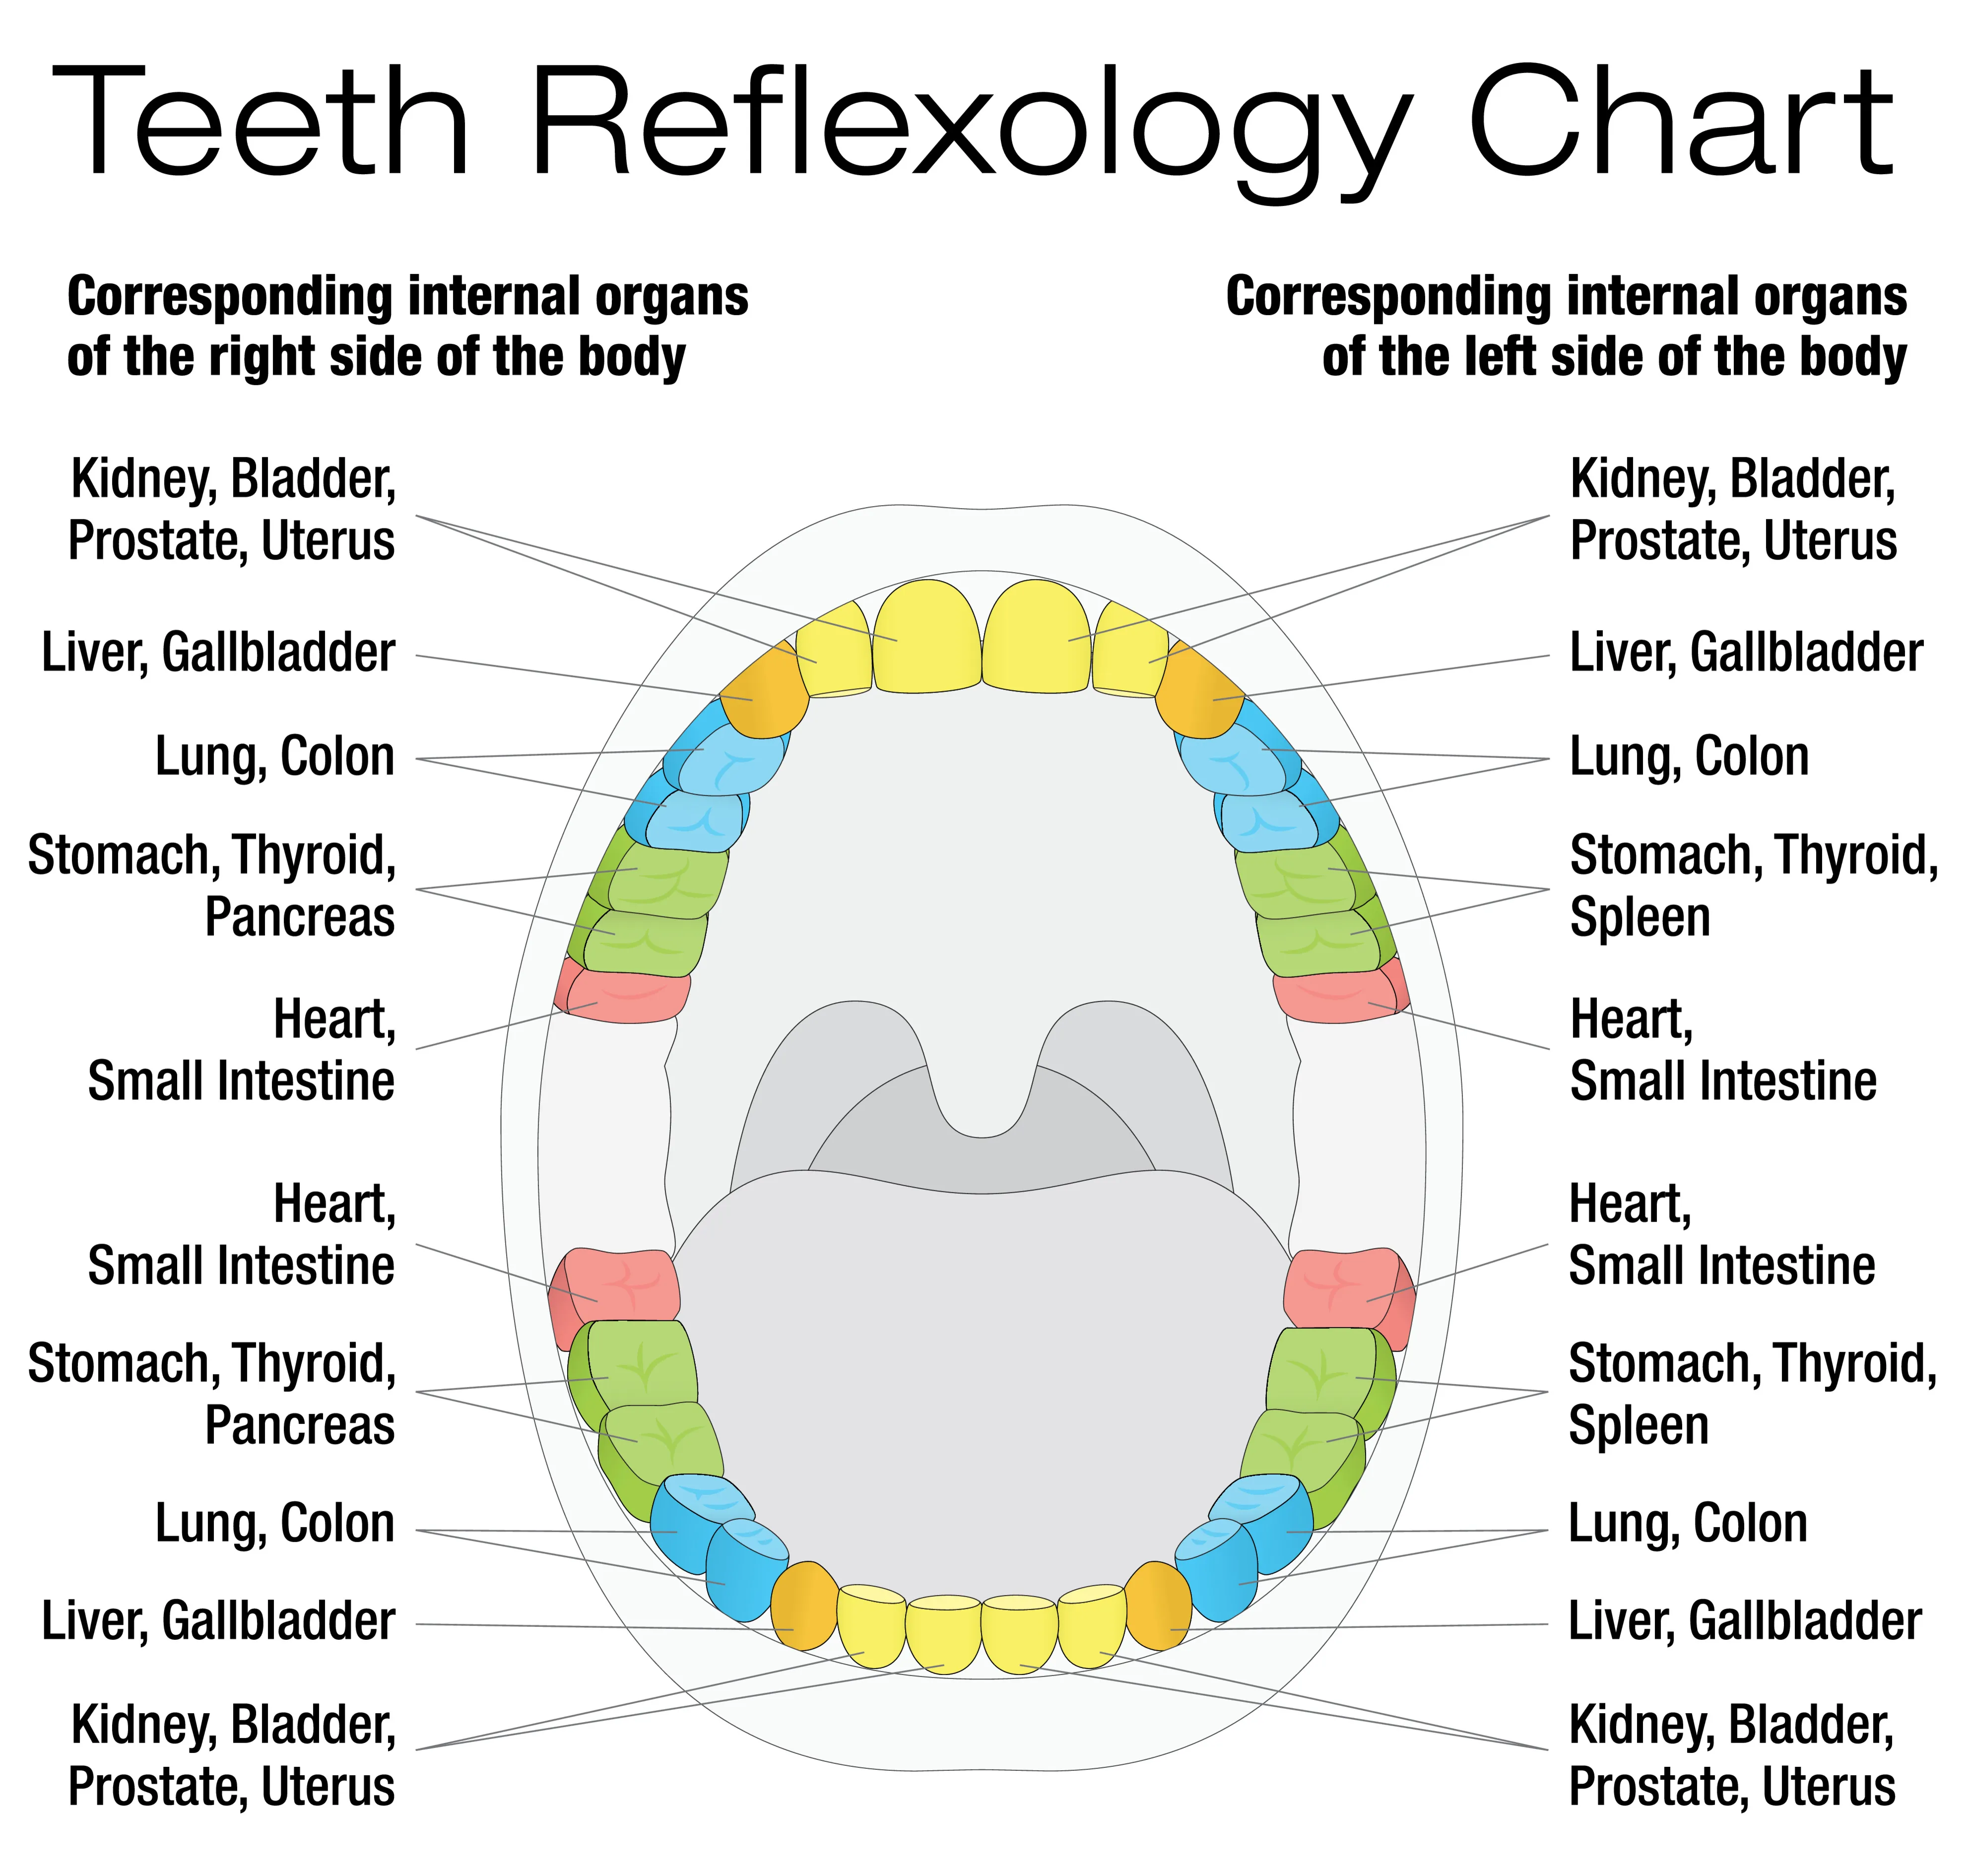 Teeth Reflexology Chart